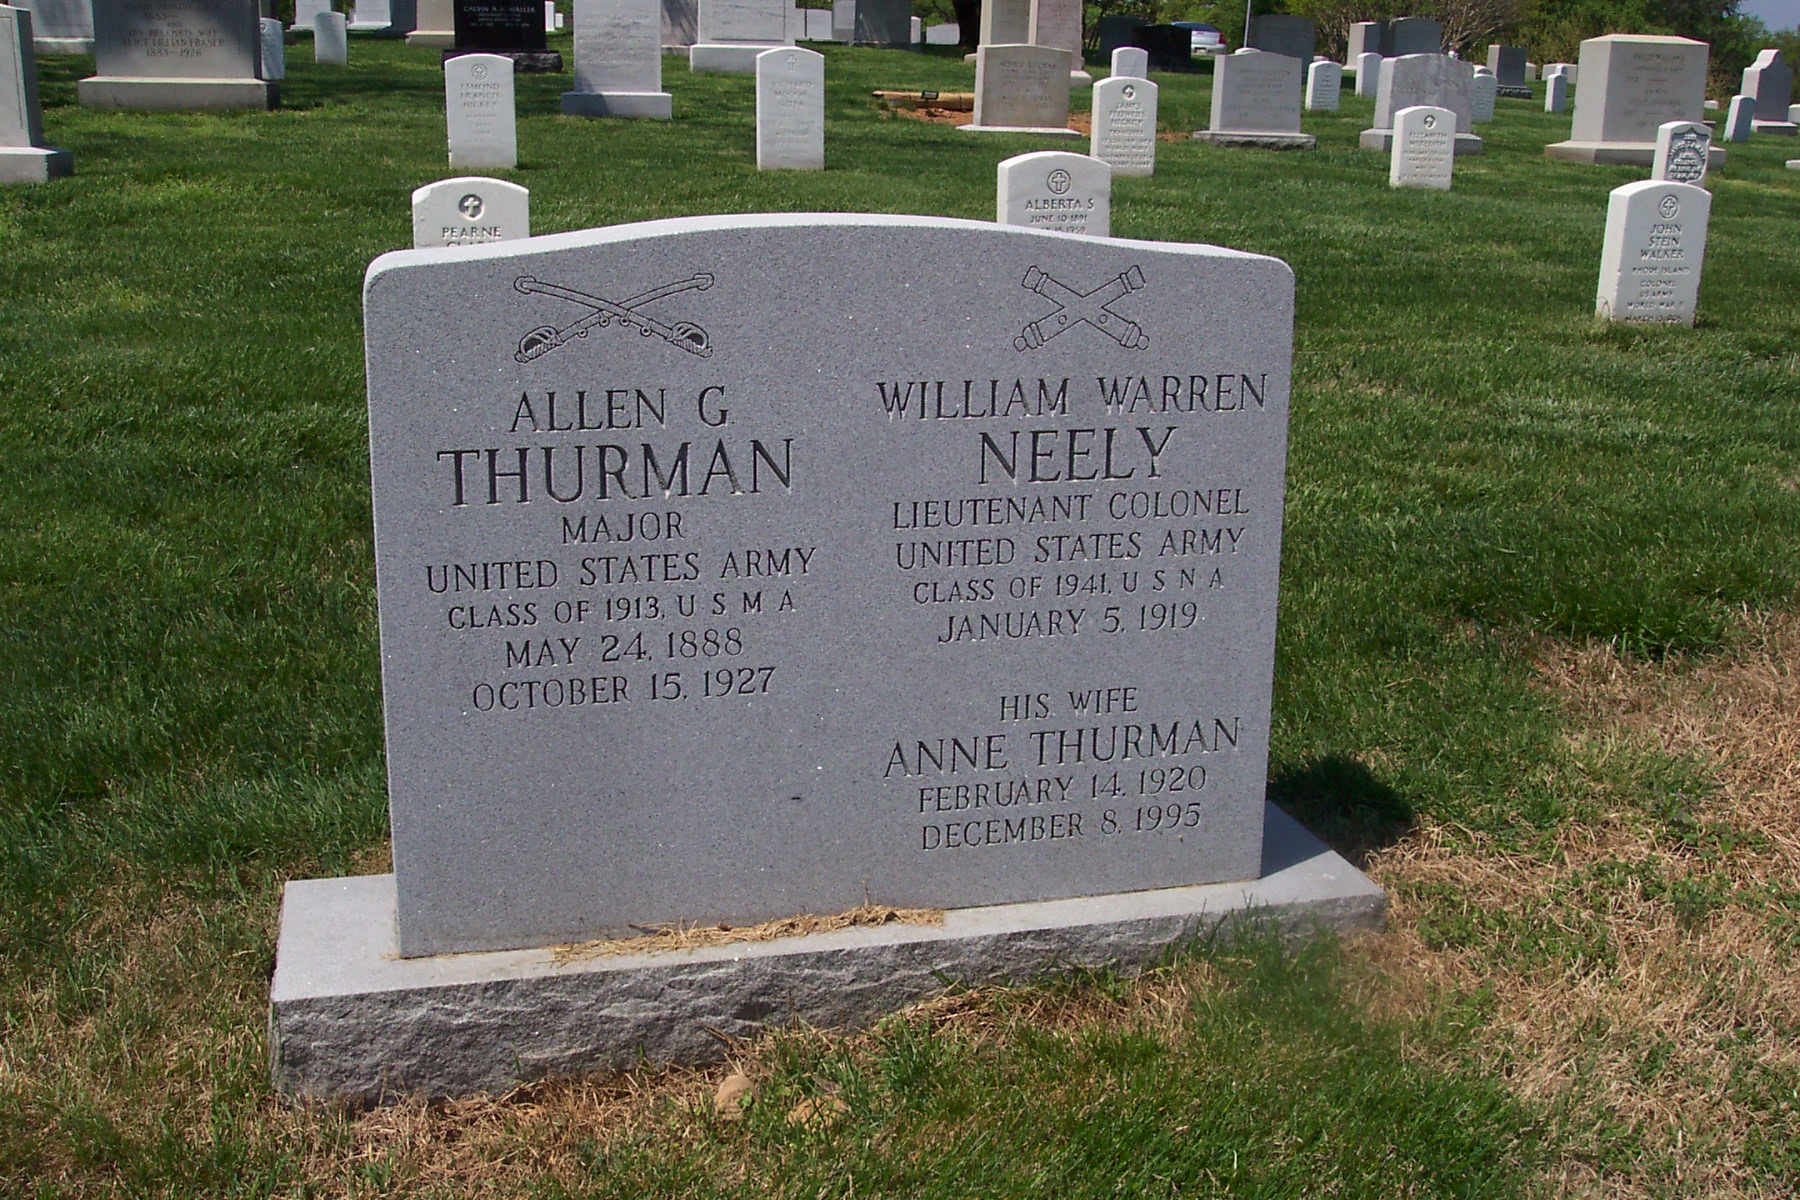 agthurman-gravesite-photo-april-2004-001